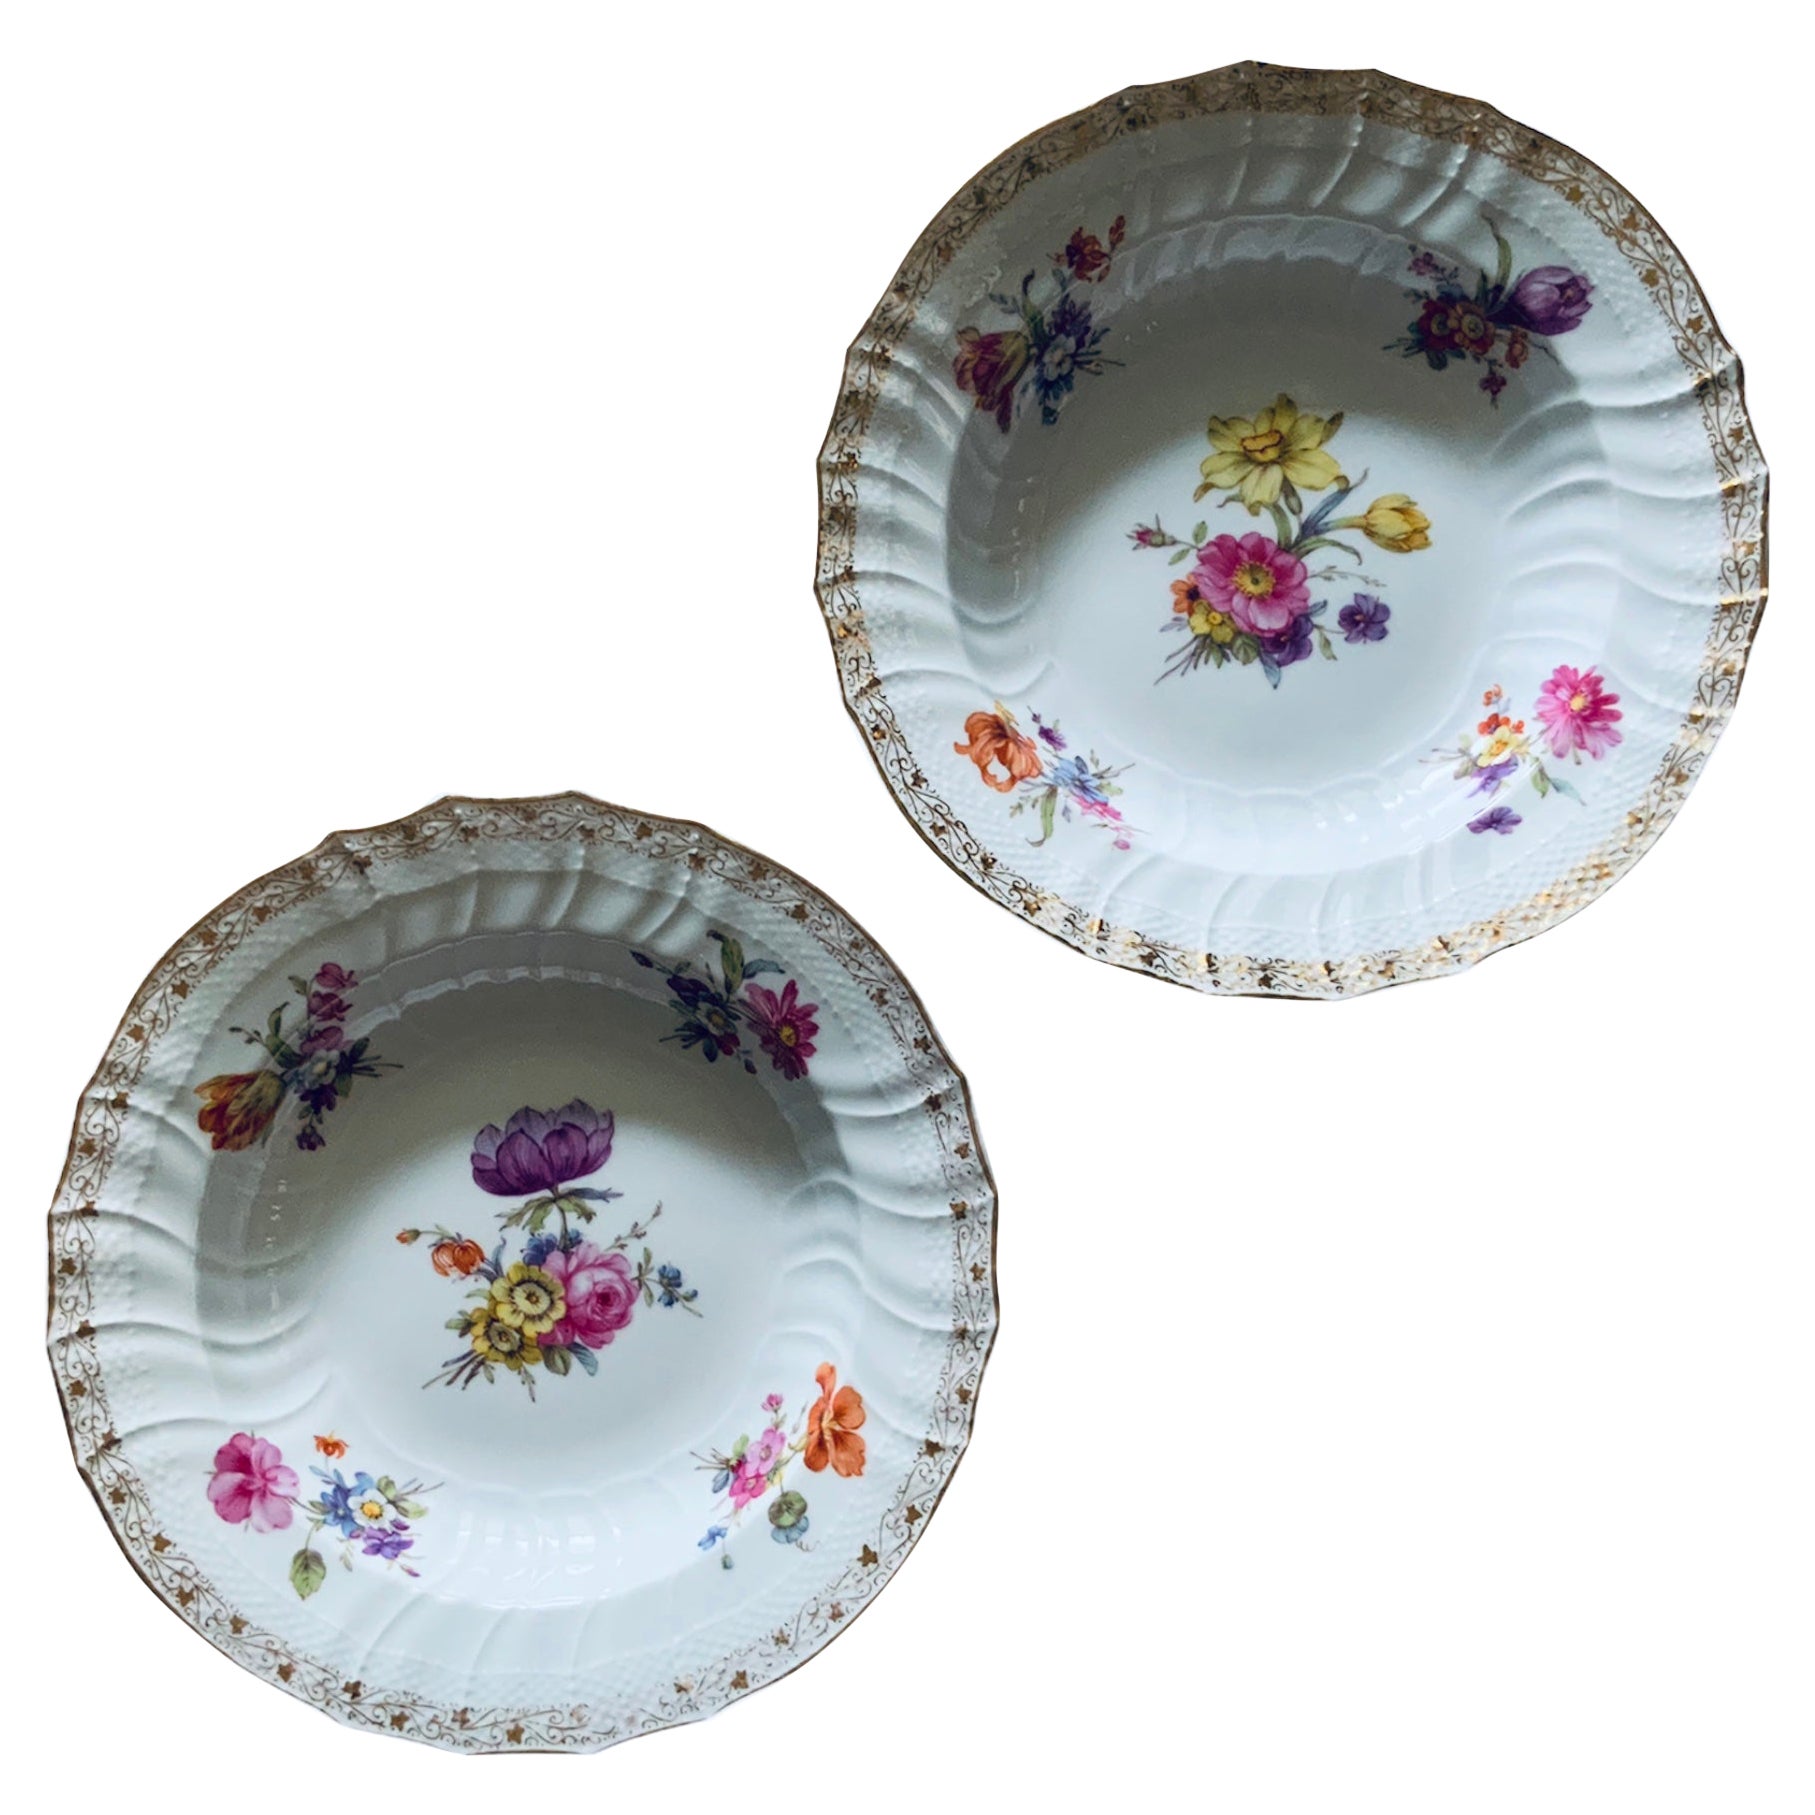 KPM Porcelain Set Of Two Large Bowl Plates